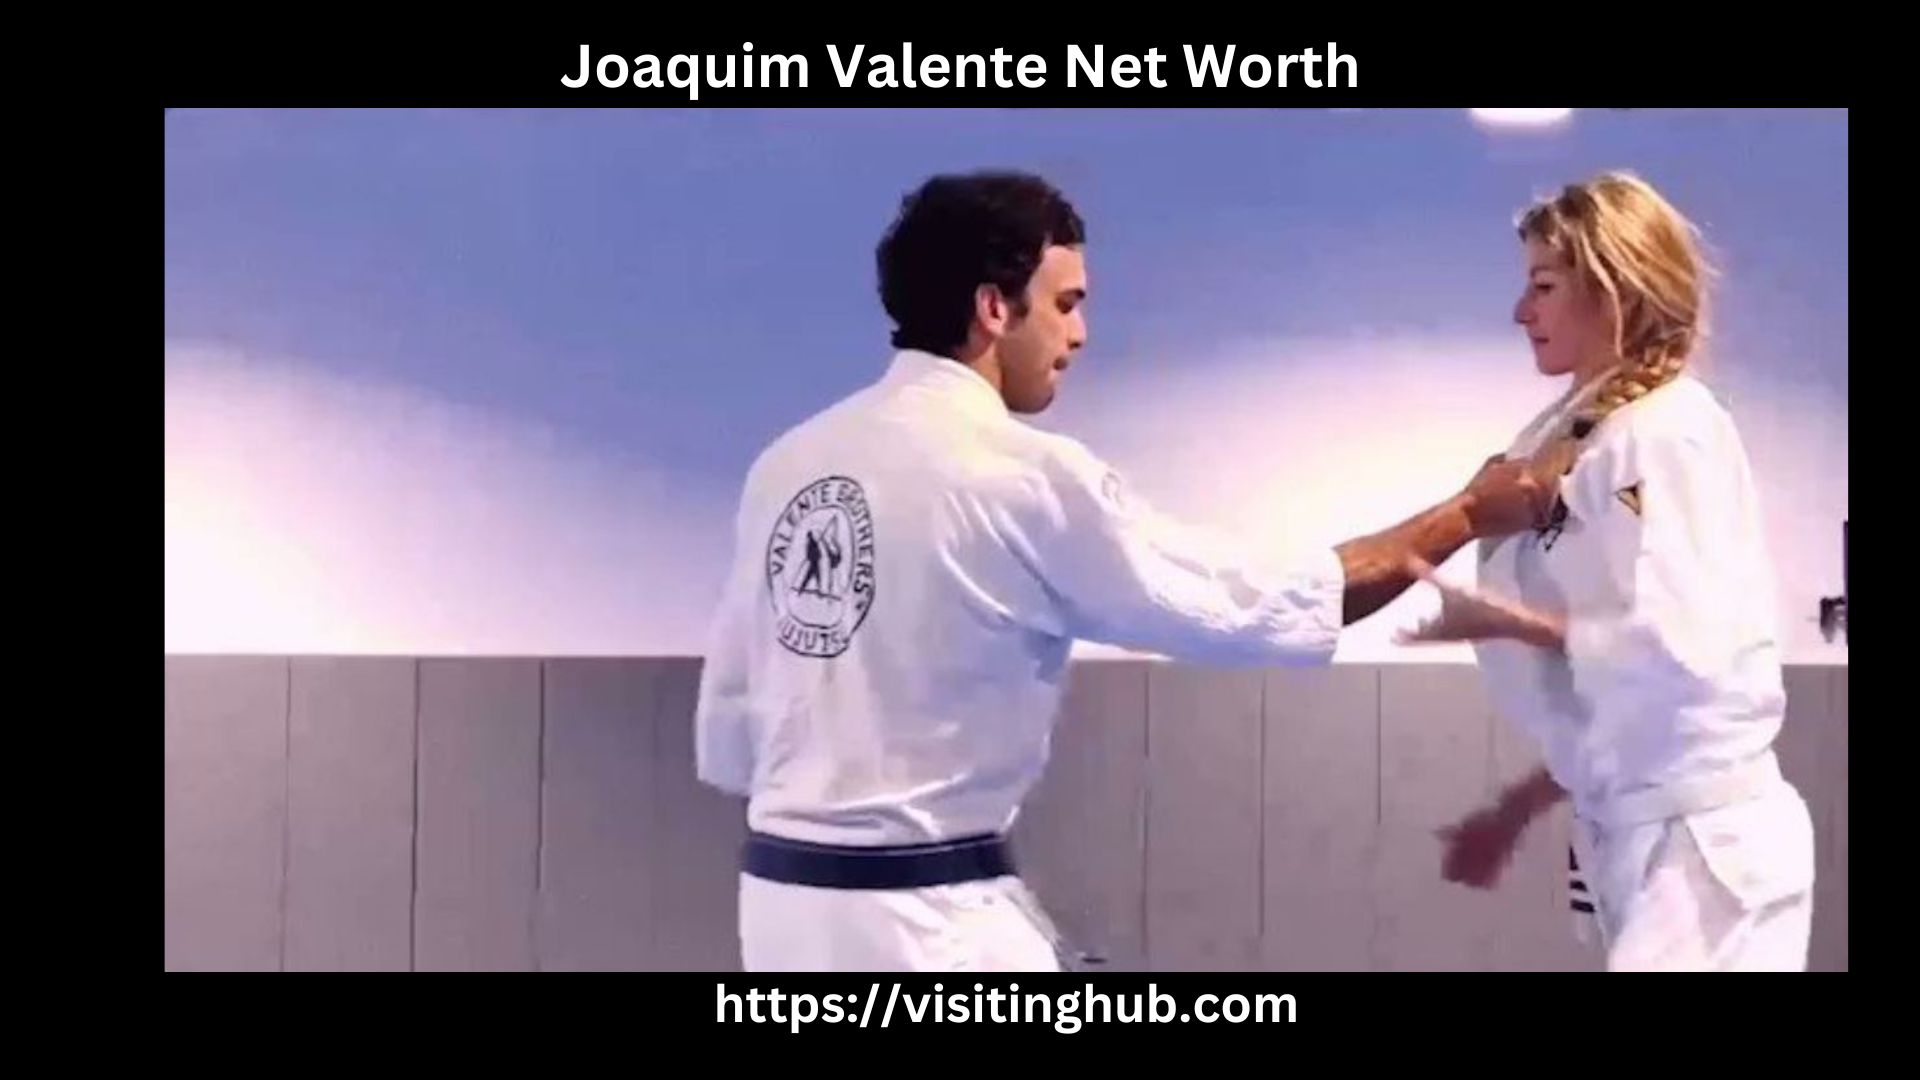 Joaquim Valente Net Worth